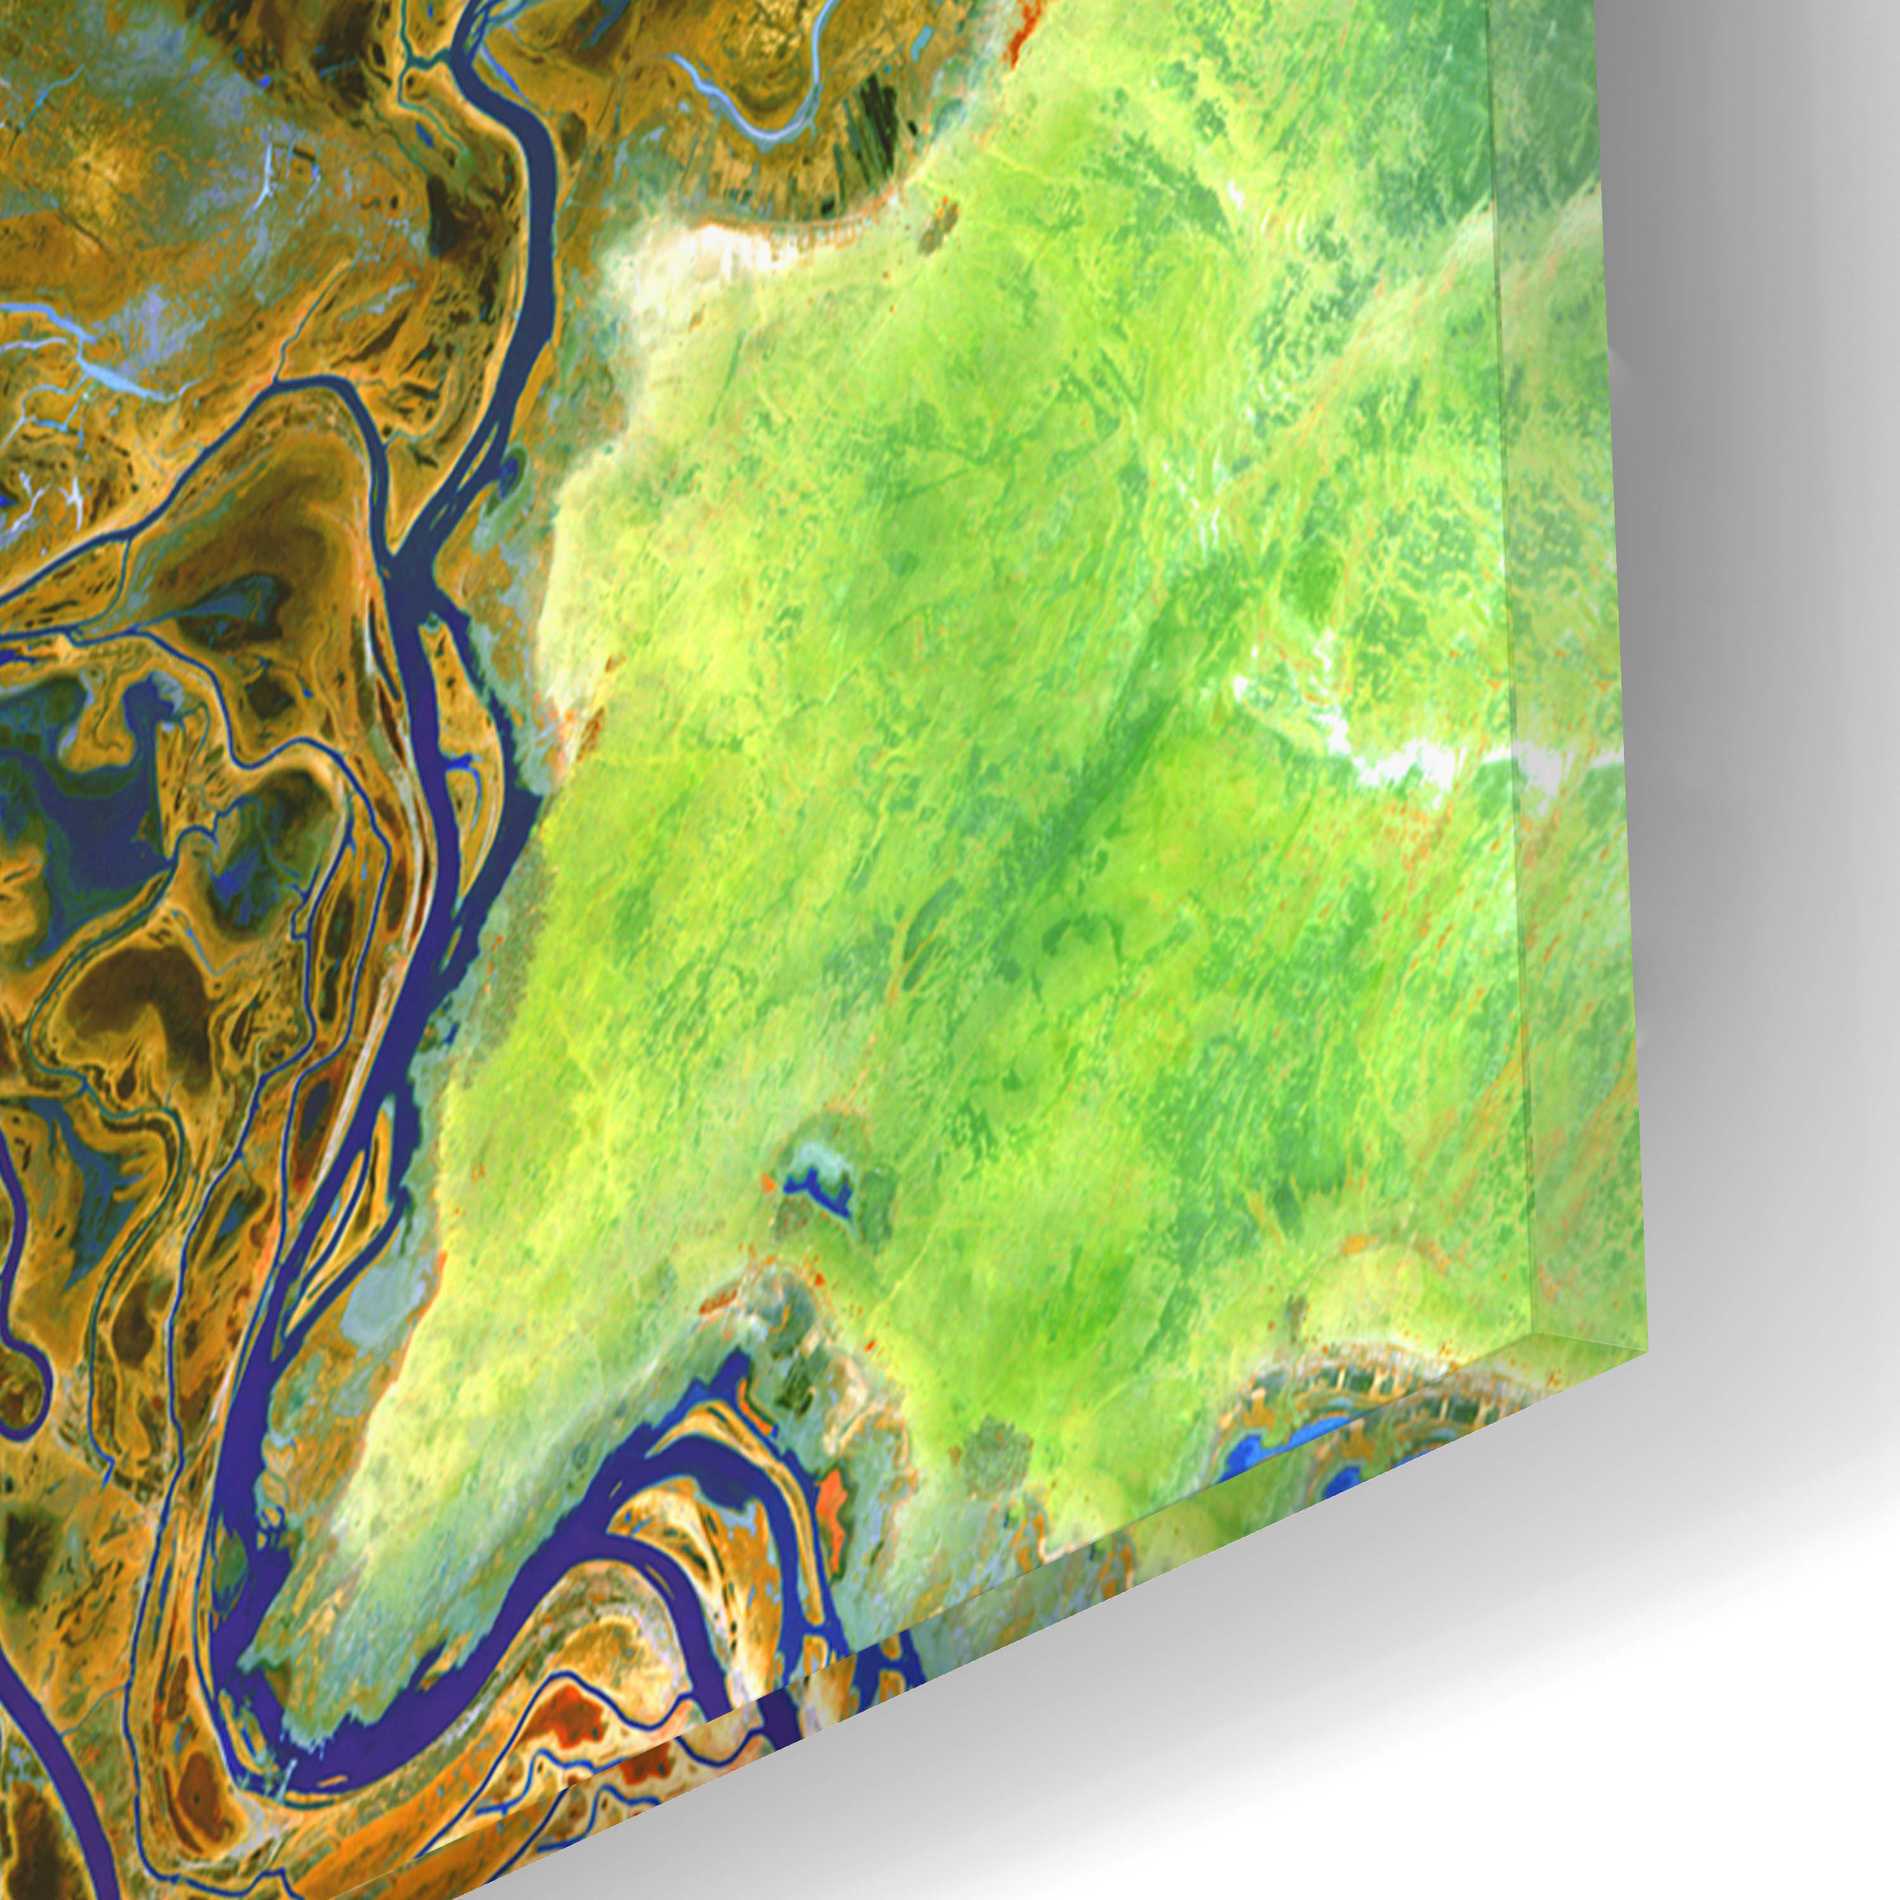 Epic Art 'Earth as Art: Niger River' Acrylic Glass Wall Art,12x12